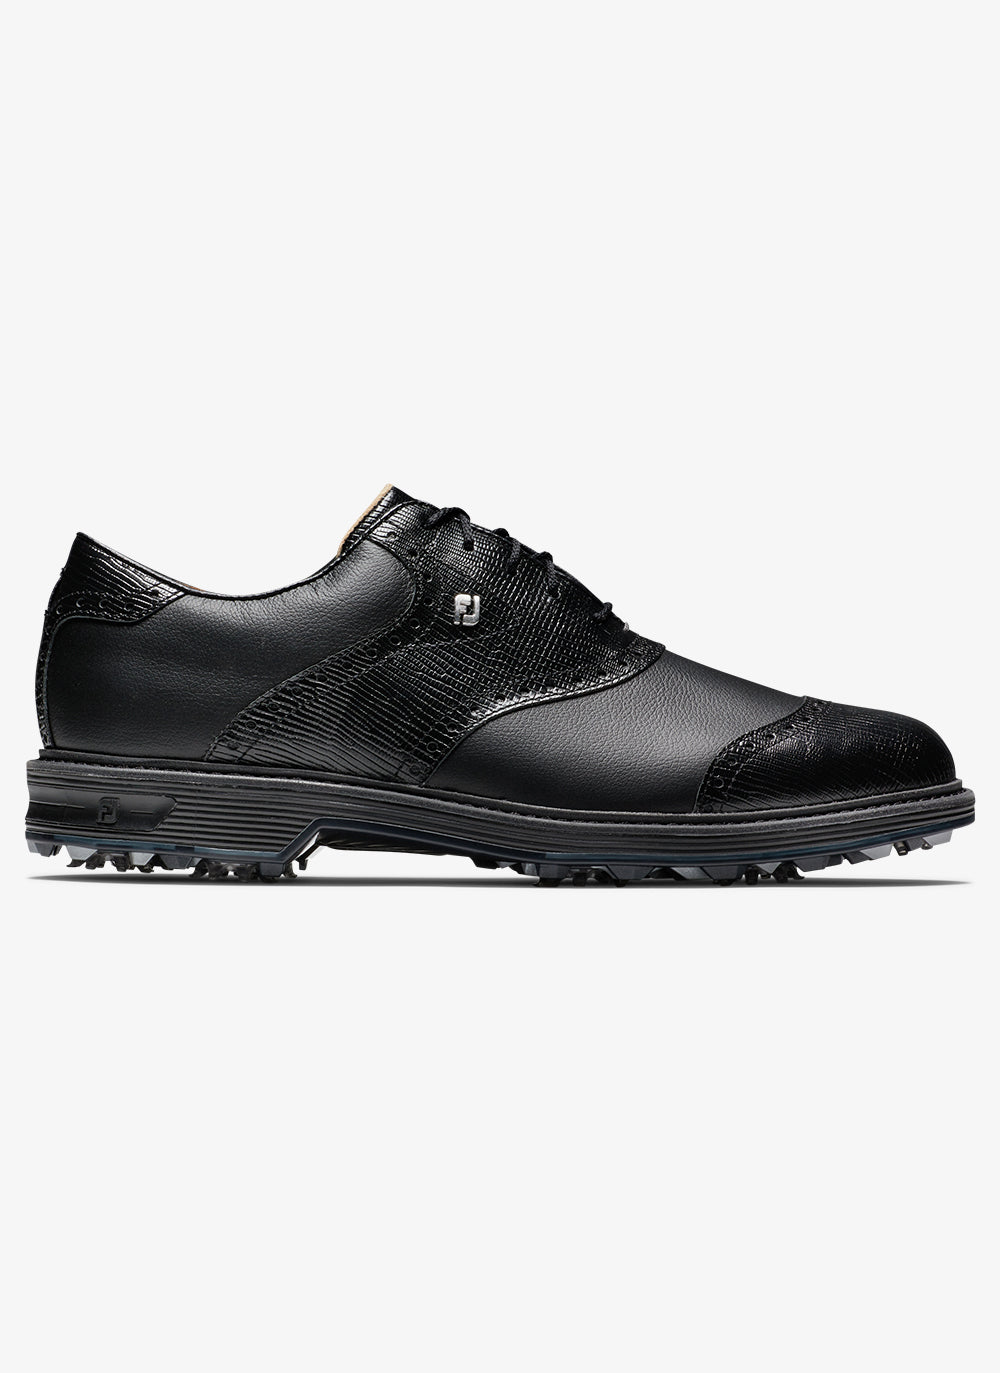 FootJoy Premiere Series Wilcox Golf Shoes 54326